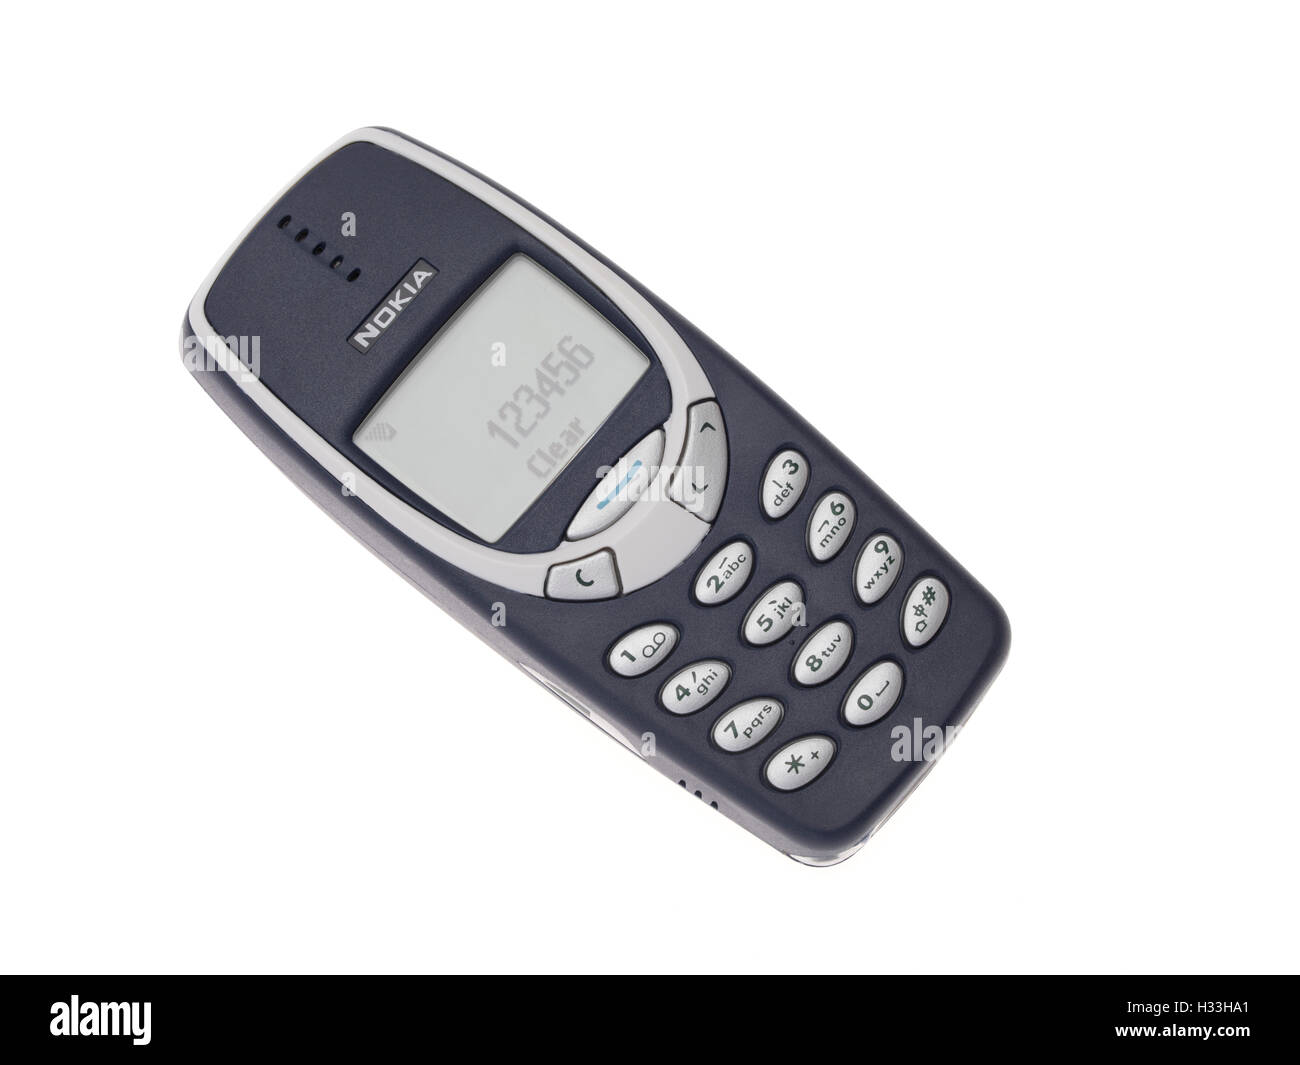 Nokia 3310 GSM mobile phone released 2000 Stock Photo - Alamy